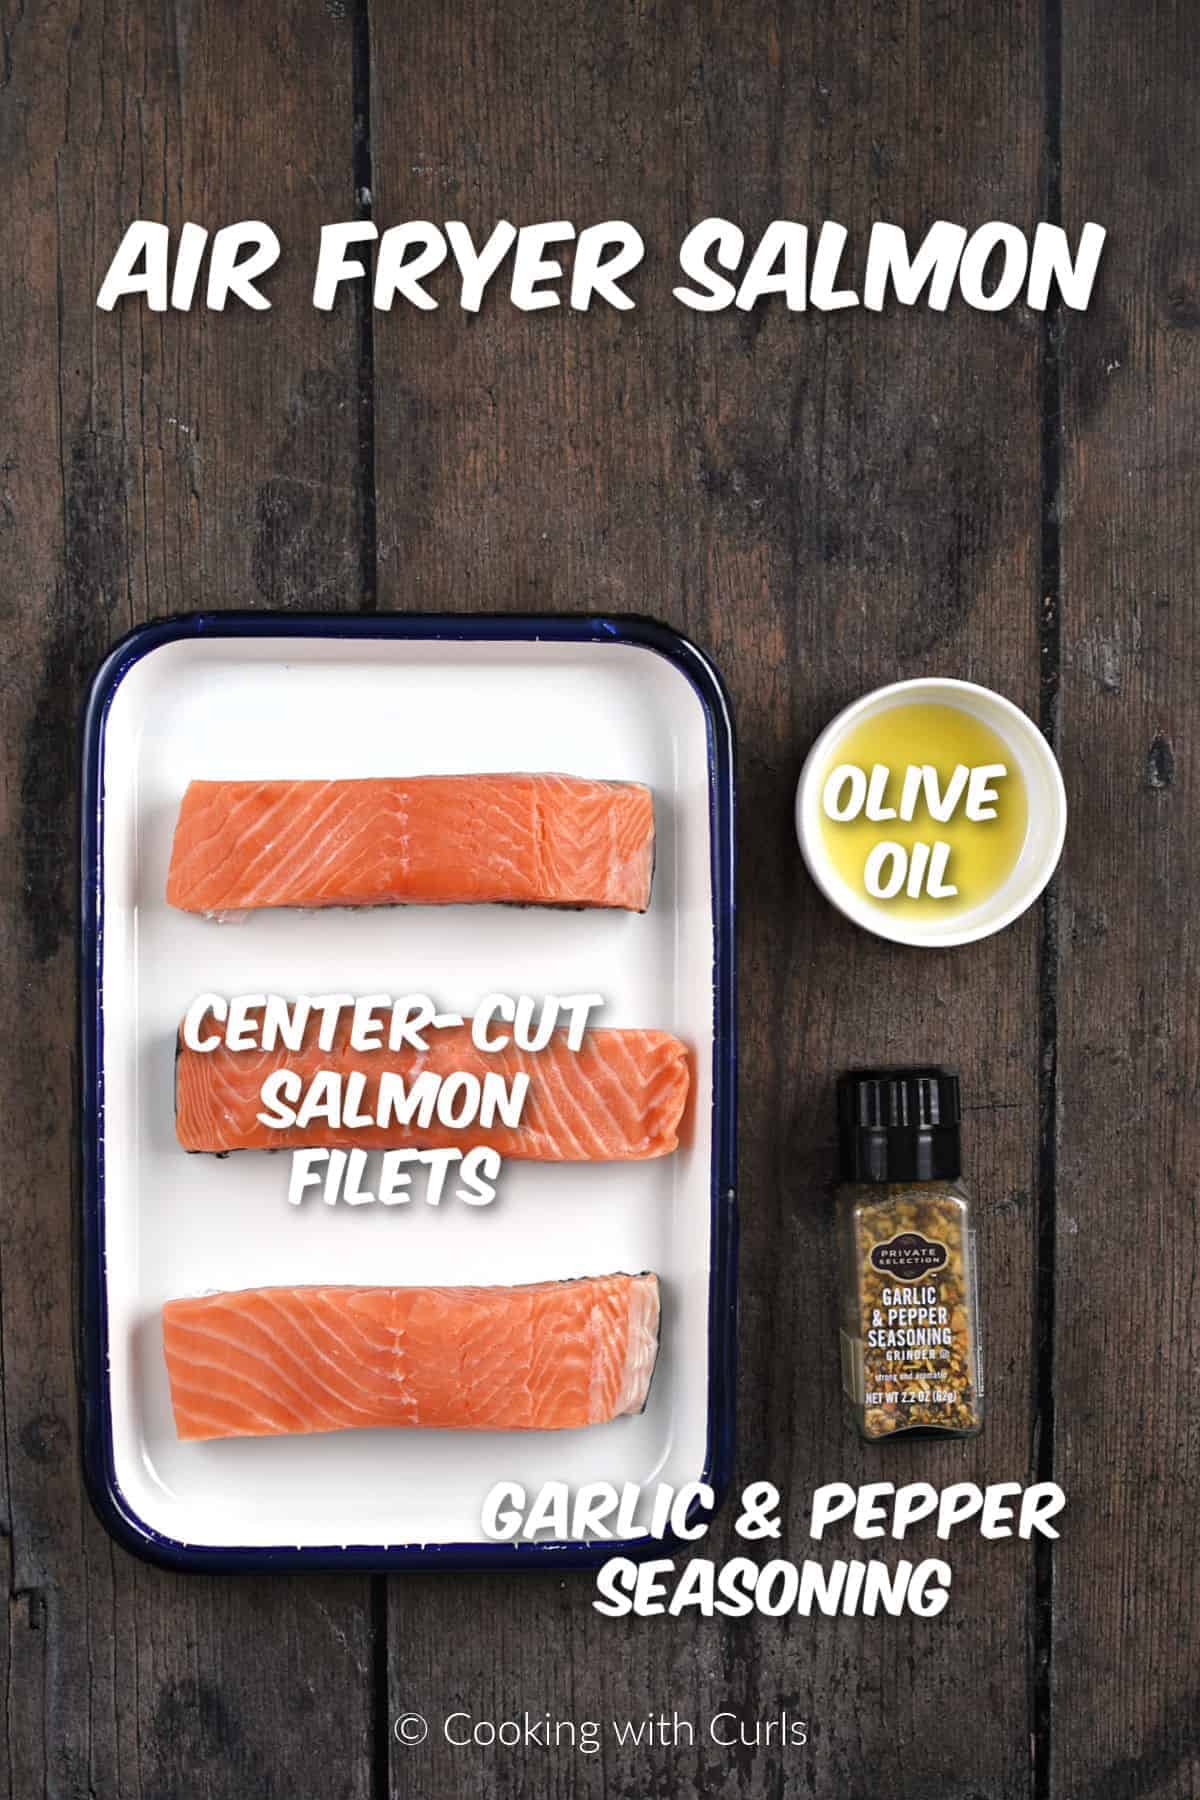 Ingredients to make air fryer salmon. 